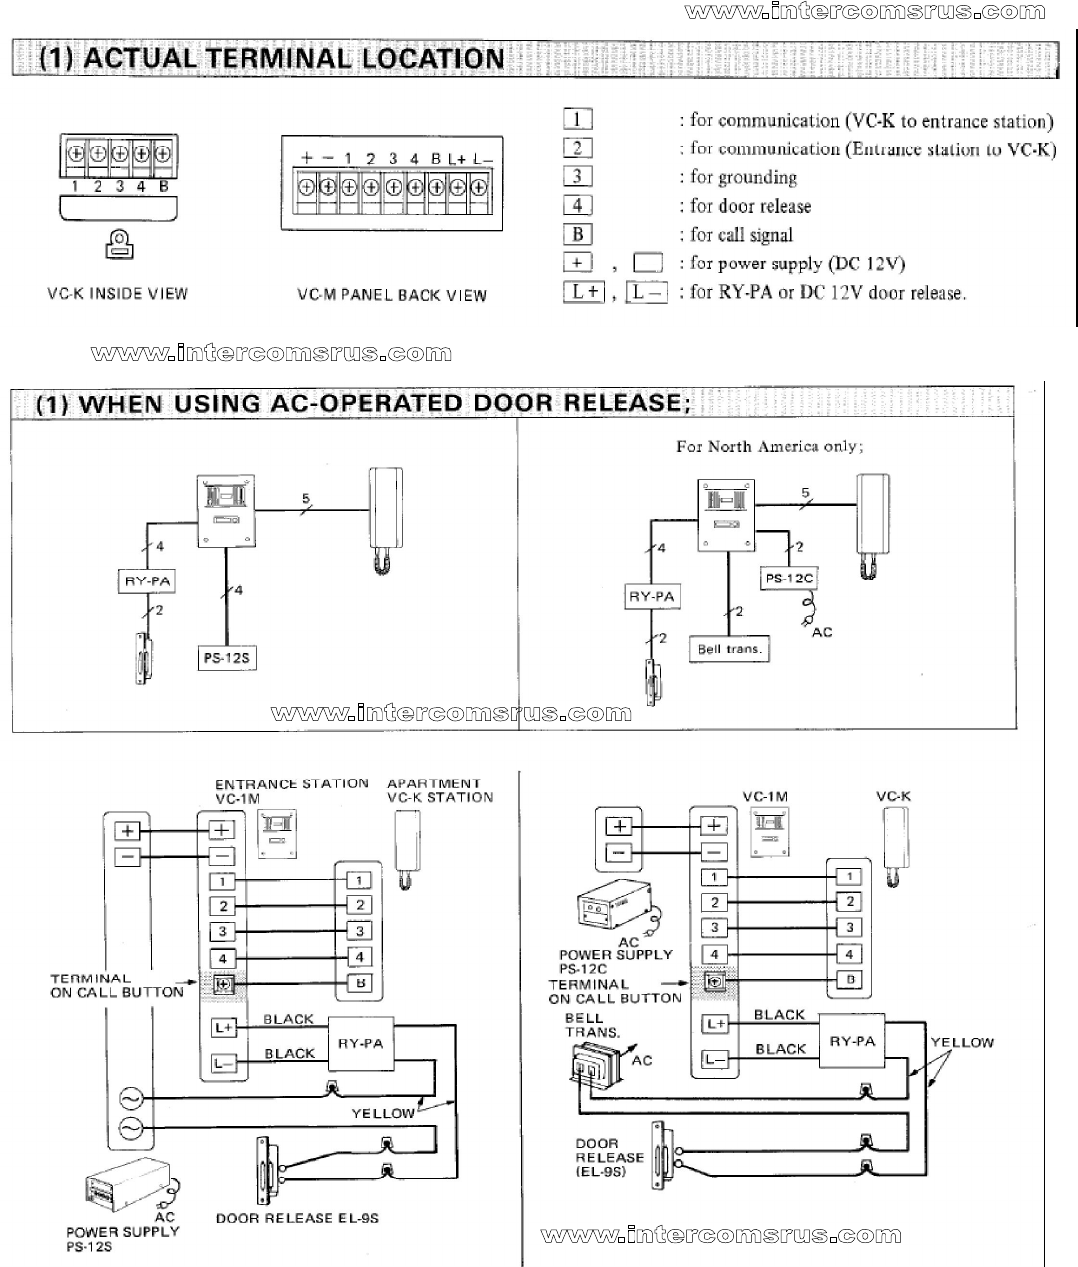 Aiphone Wiring Diagram - Wiring Diagram Networks